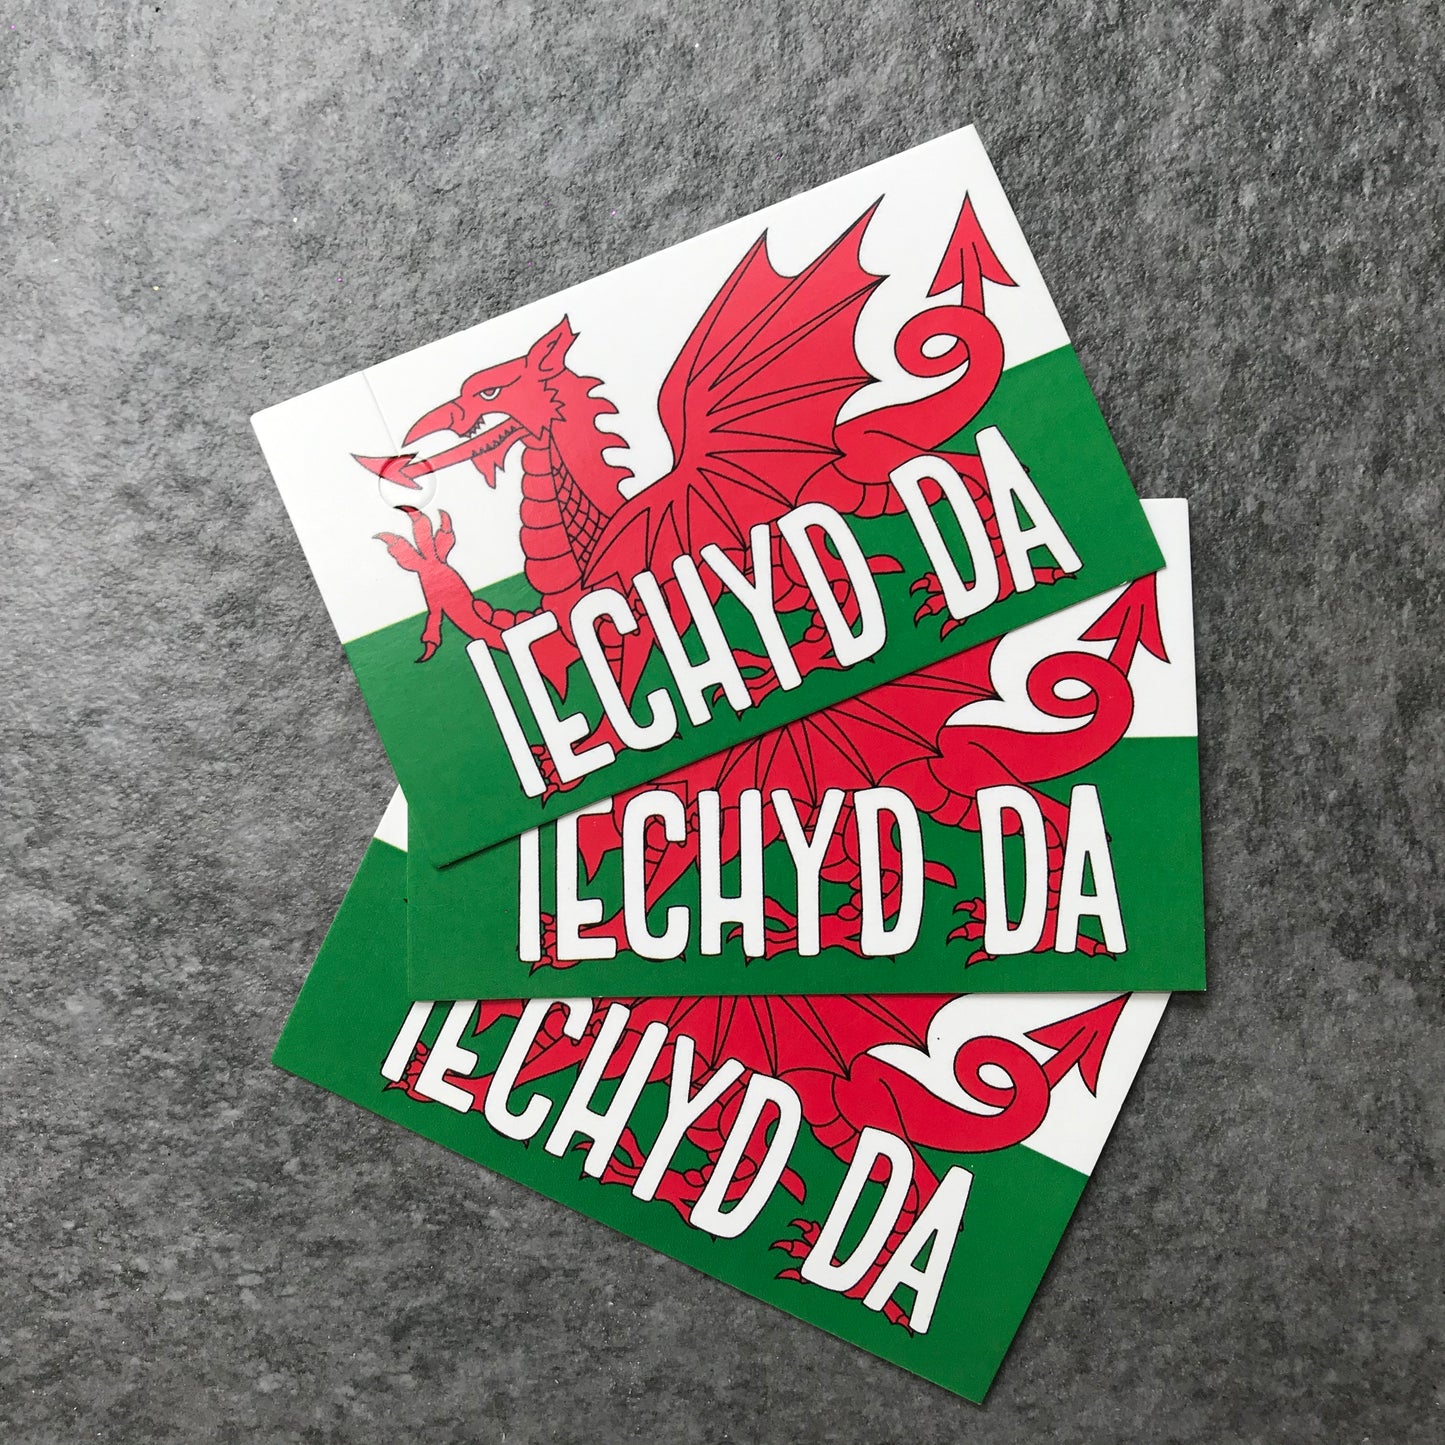 Baner Cymru or Welsh Dragon versatile Gift Bag